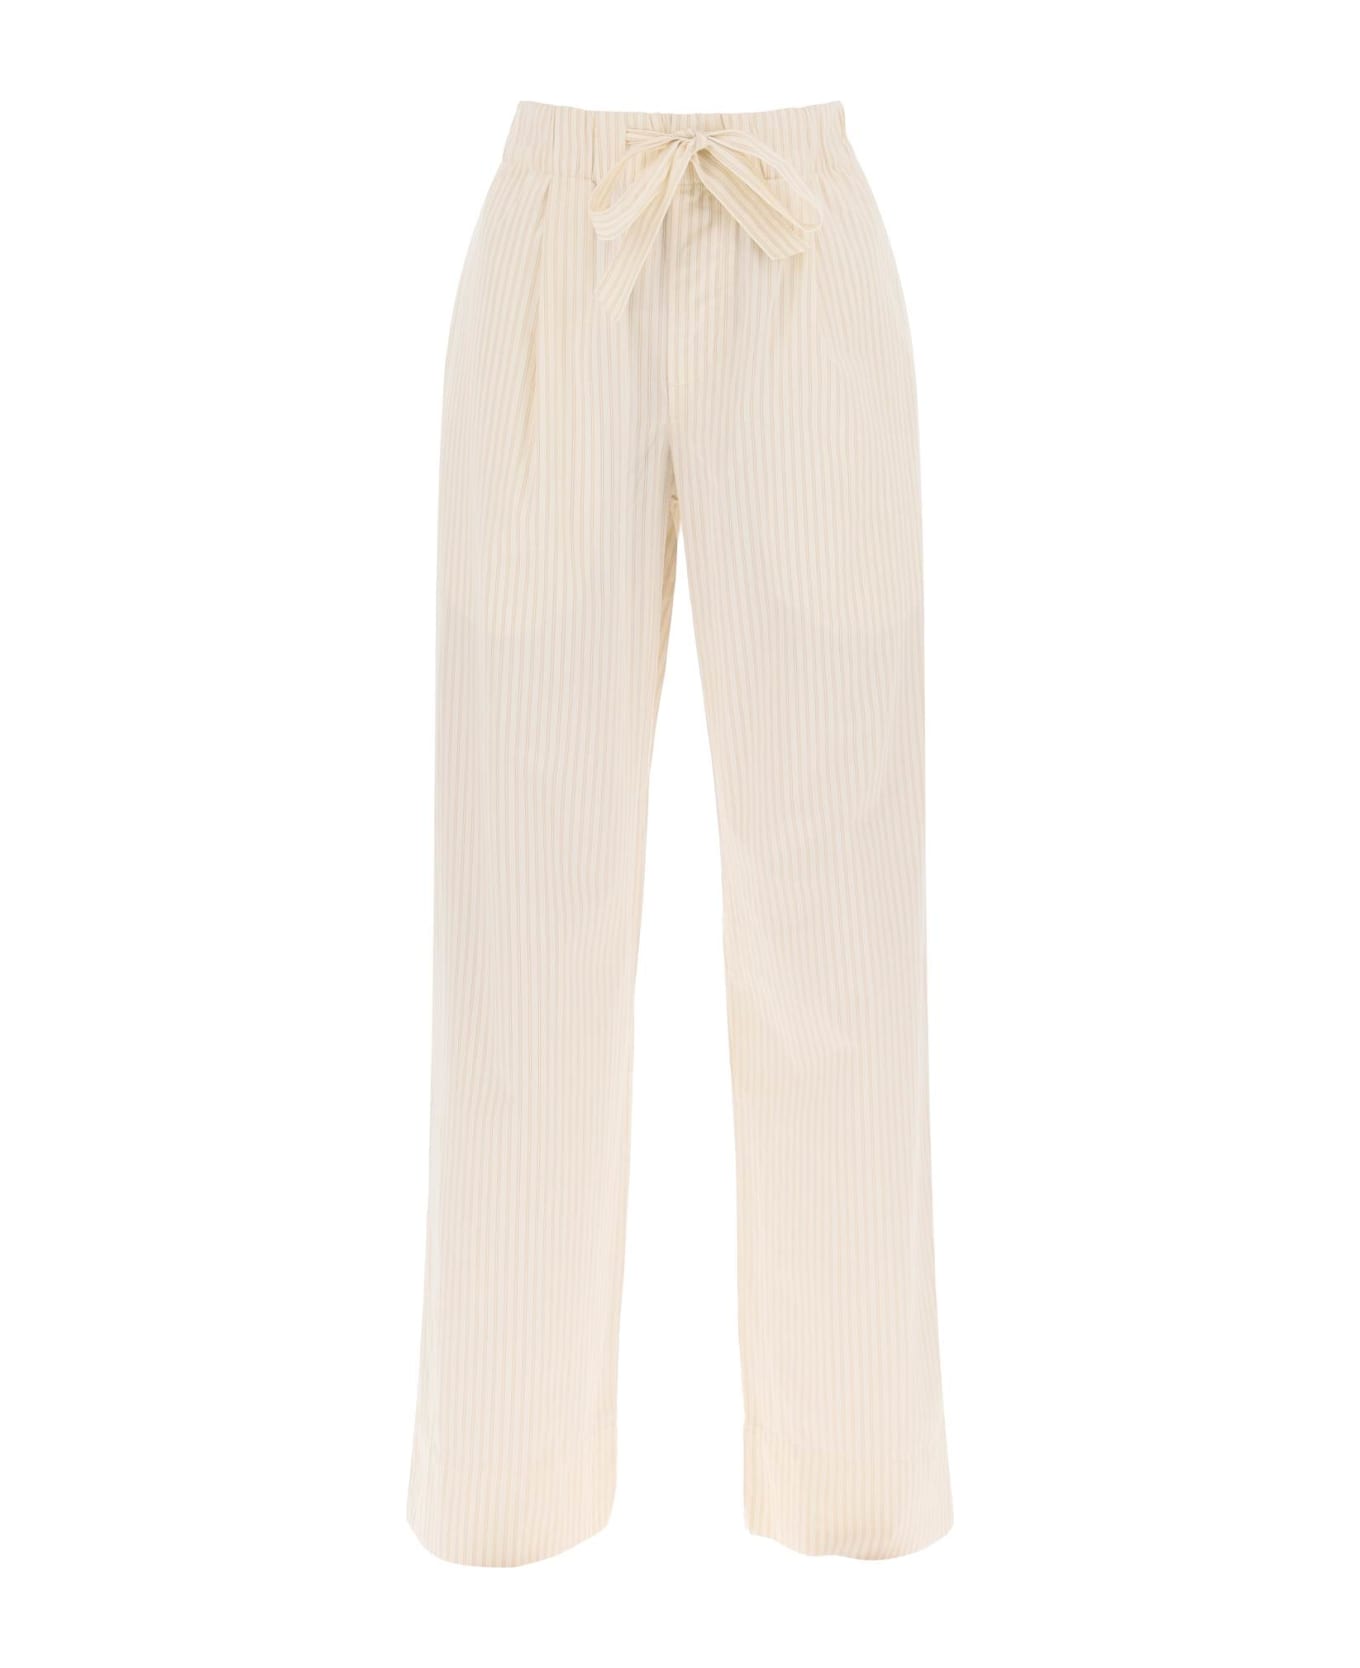 Birkenstock Pajama Pants In Striped Organic Poplin - WHEAT STRIPES (Beige)